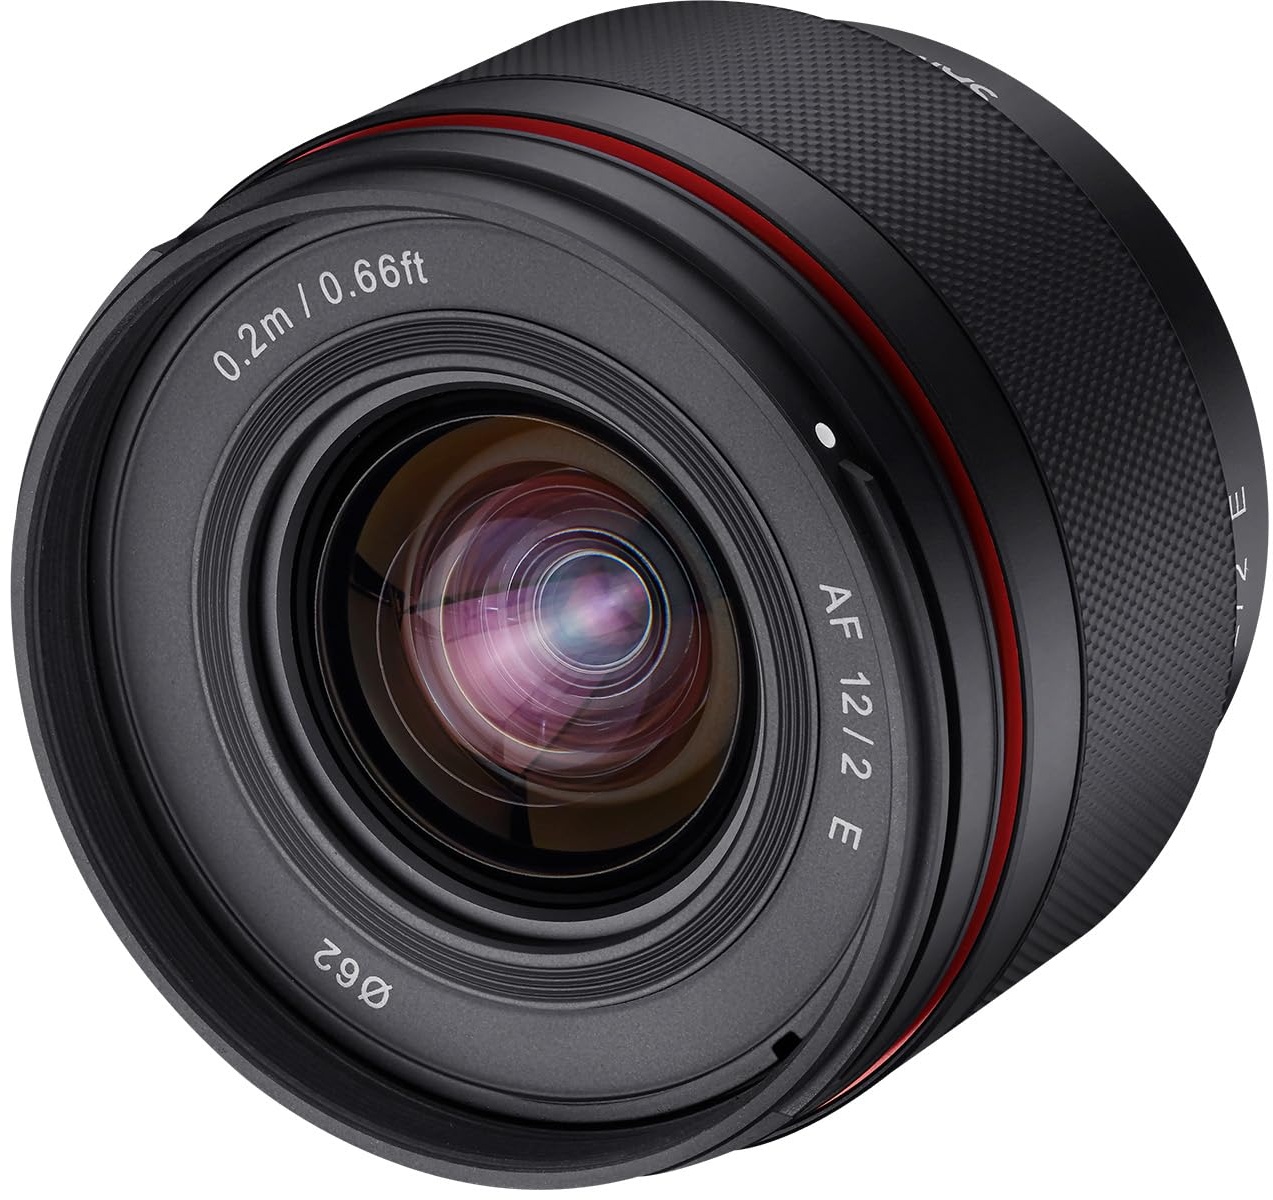 Samyang AF 12mm F2.0 E Objektiv für Sony E – Autofokus APS-C Weitwinkel Festbrennweite Objektiv für Sony E Mount APSC, für Kameras Sony Alpha 6600 6500 6400 6300 6100 6000 5100 5000 NEX schwarz